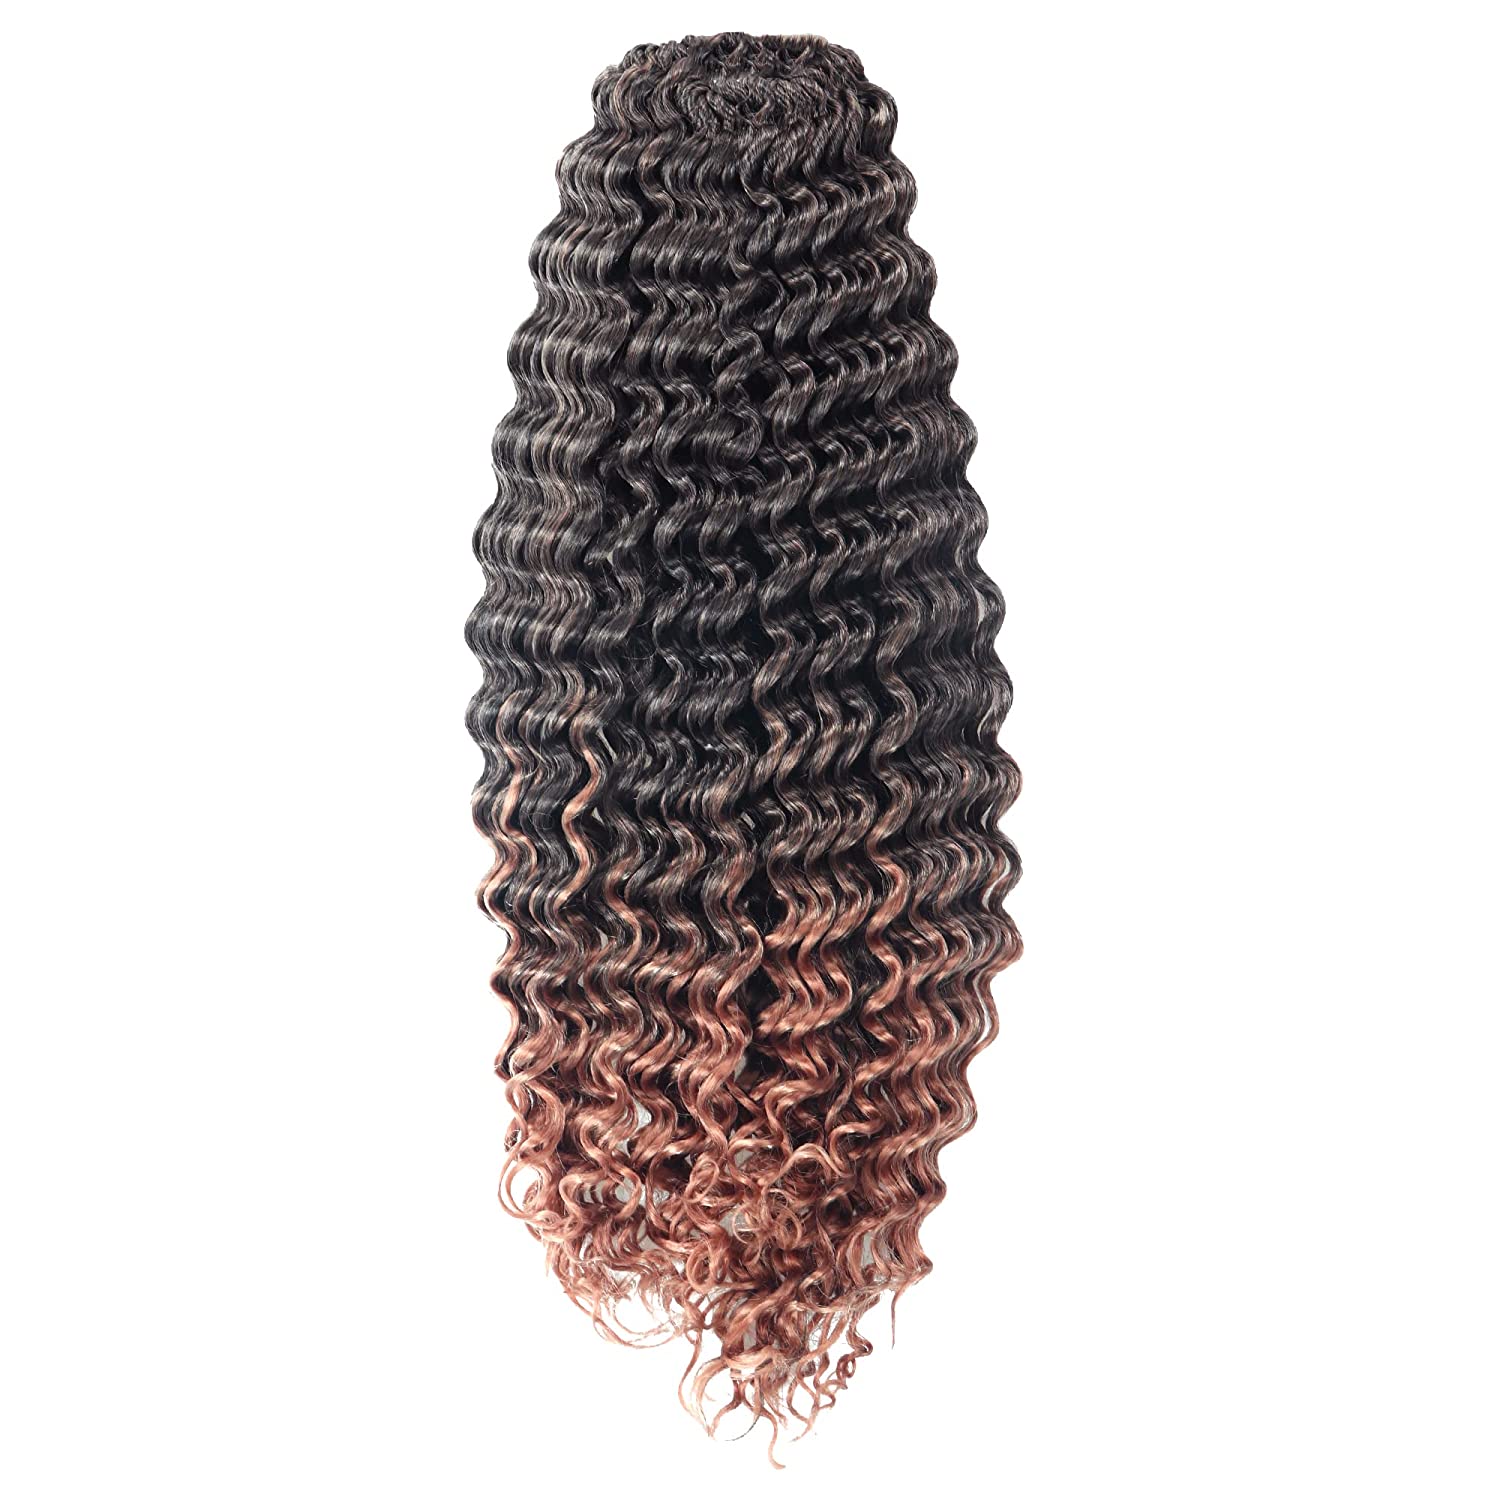 Deep Wave Crochet Hair 10-14 Inch 8 Packs | Pre-Looped Wavy Curly Crochet Synthetic Hair